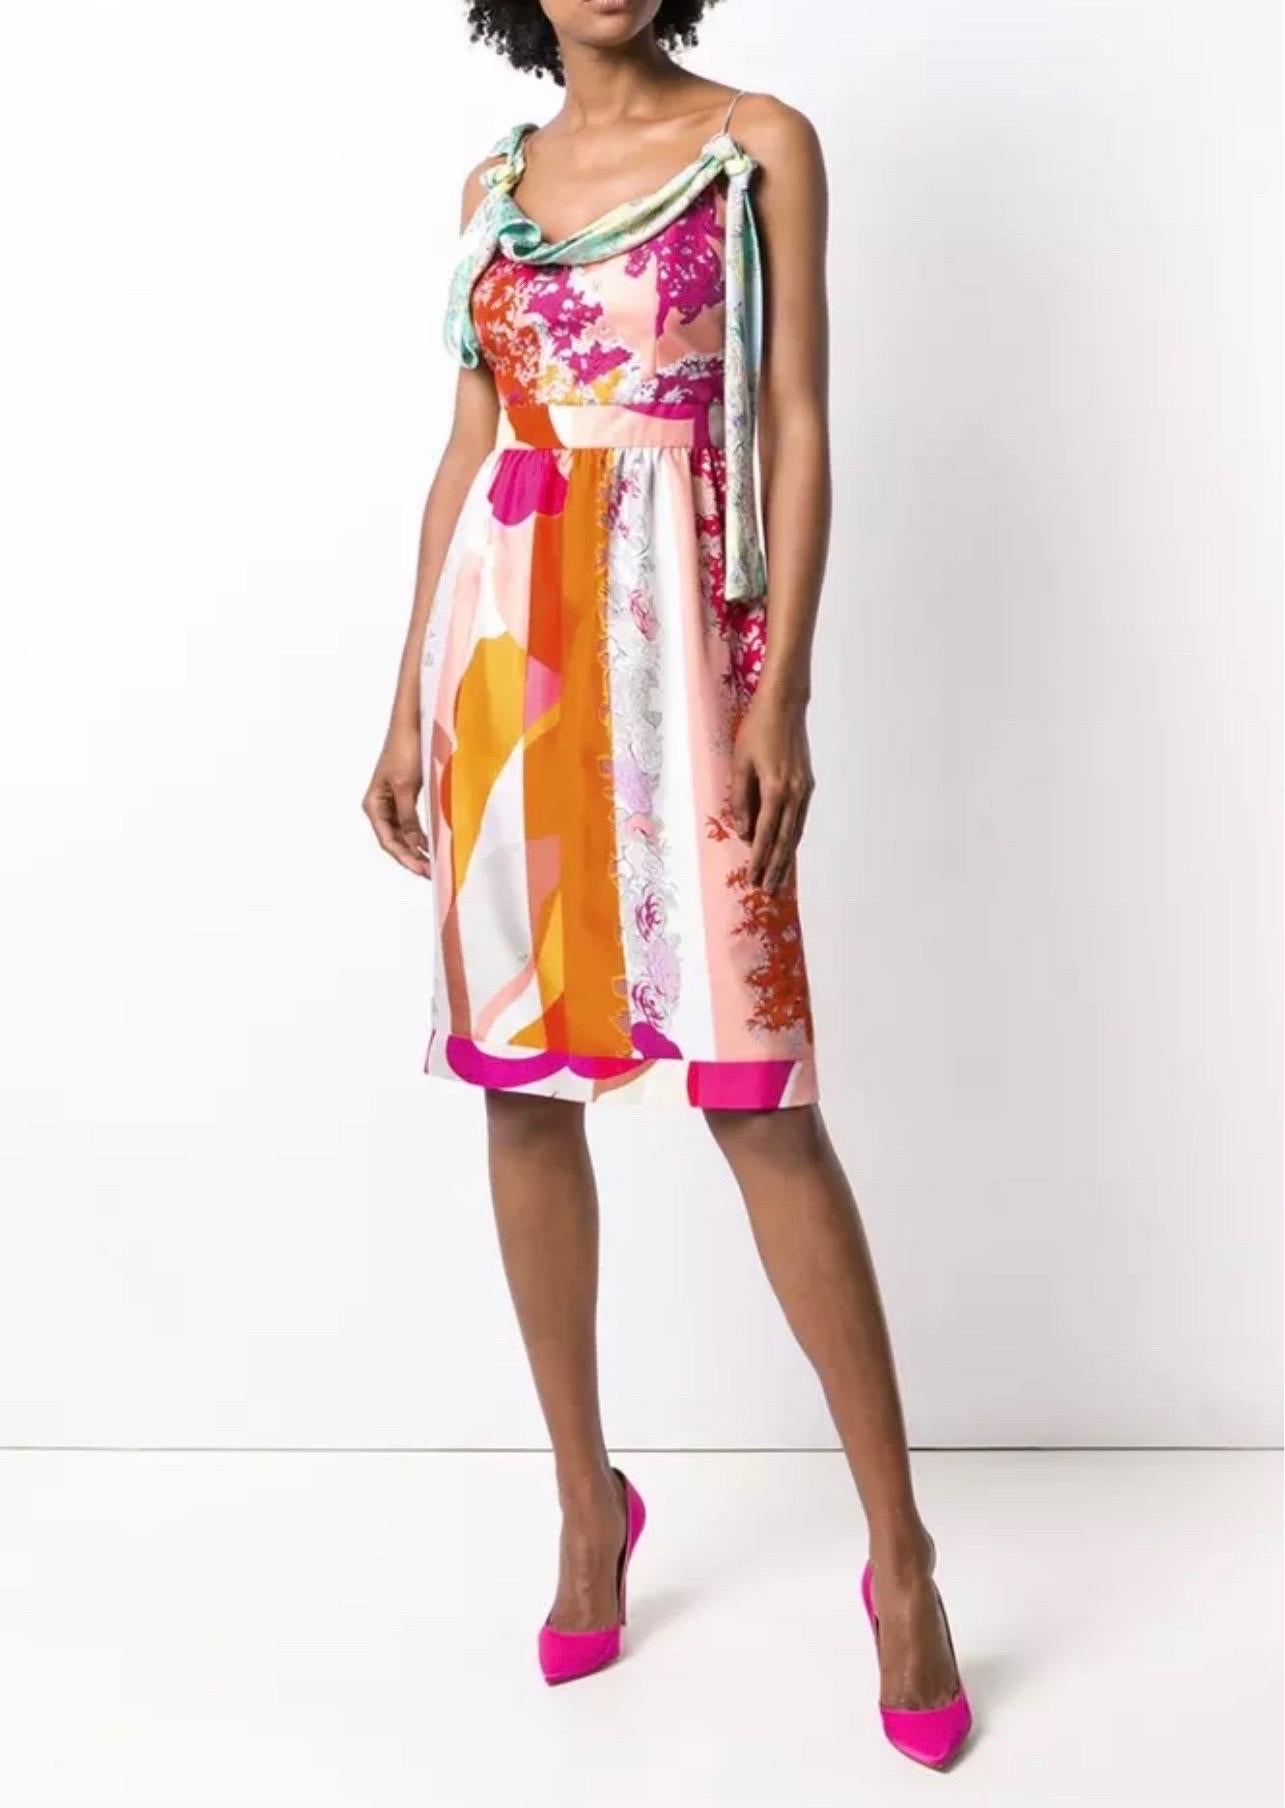 UNWORN Emilio Pucci Signature Print Draped Silk Dress 42 In New Condition For Sale In Switzerland, CH